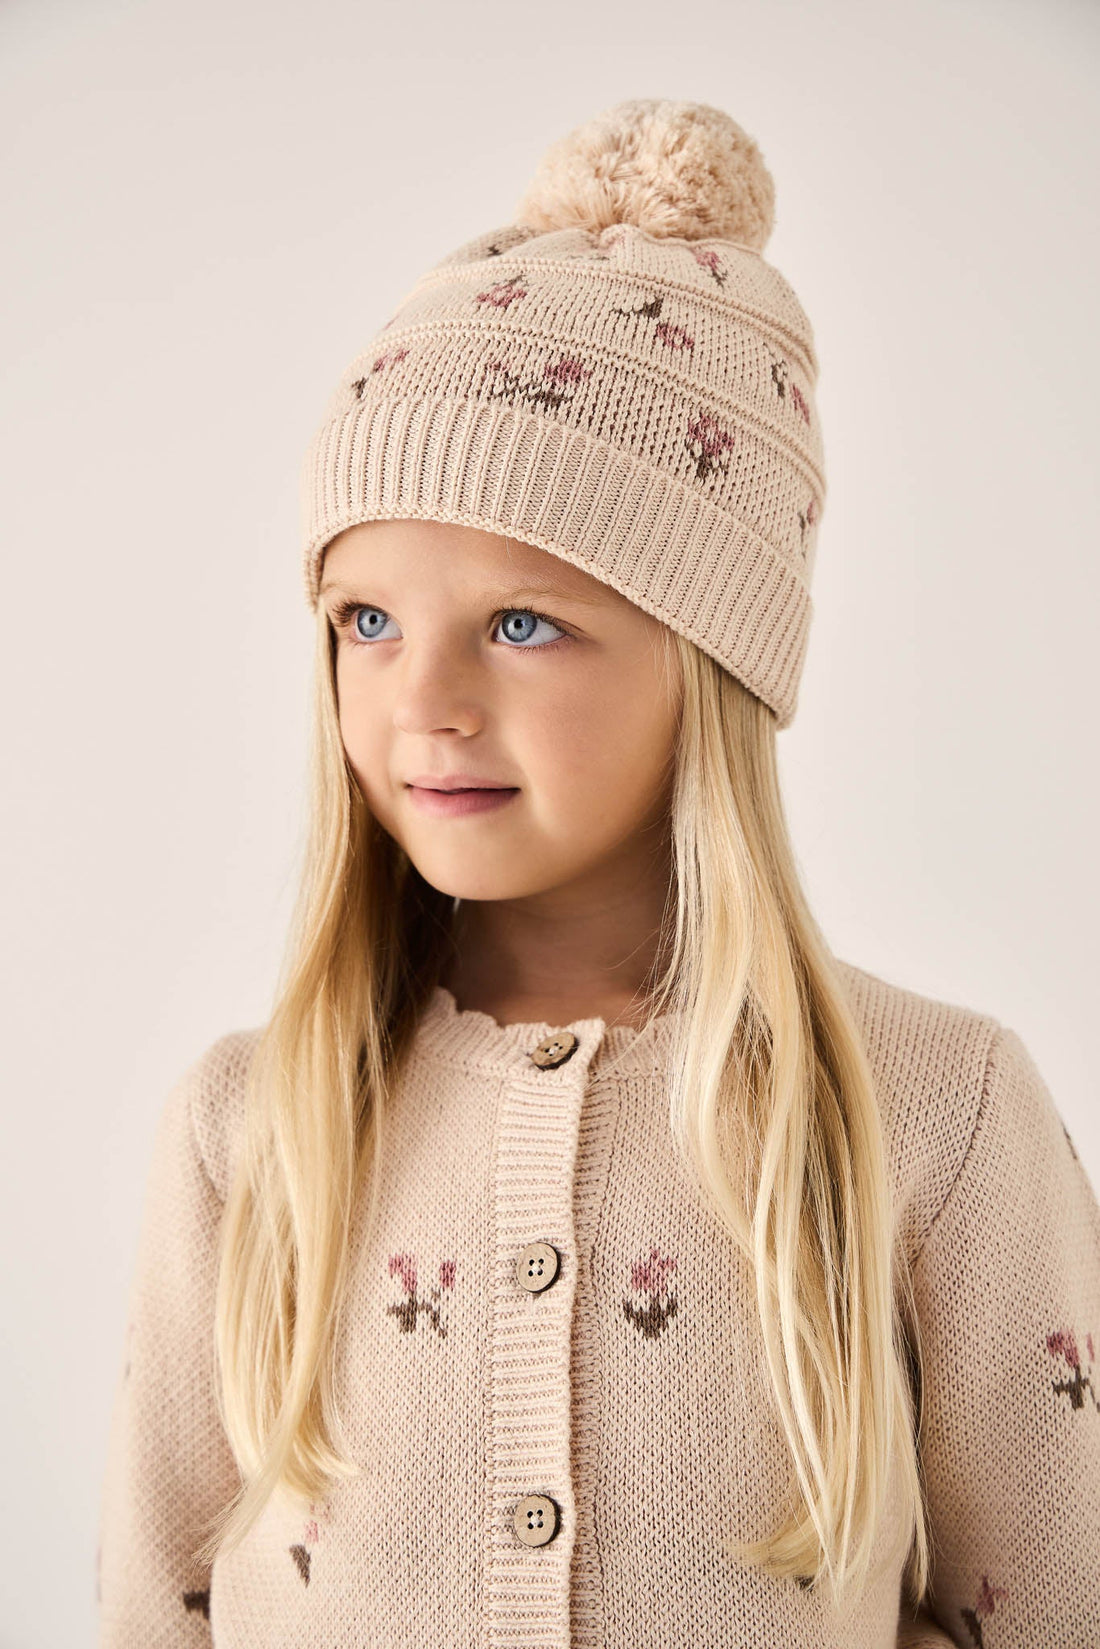 Delilah Knitted Hat - Delilah Jacquard Misty Rose Childrens Hat from Jamie Kay USA